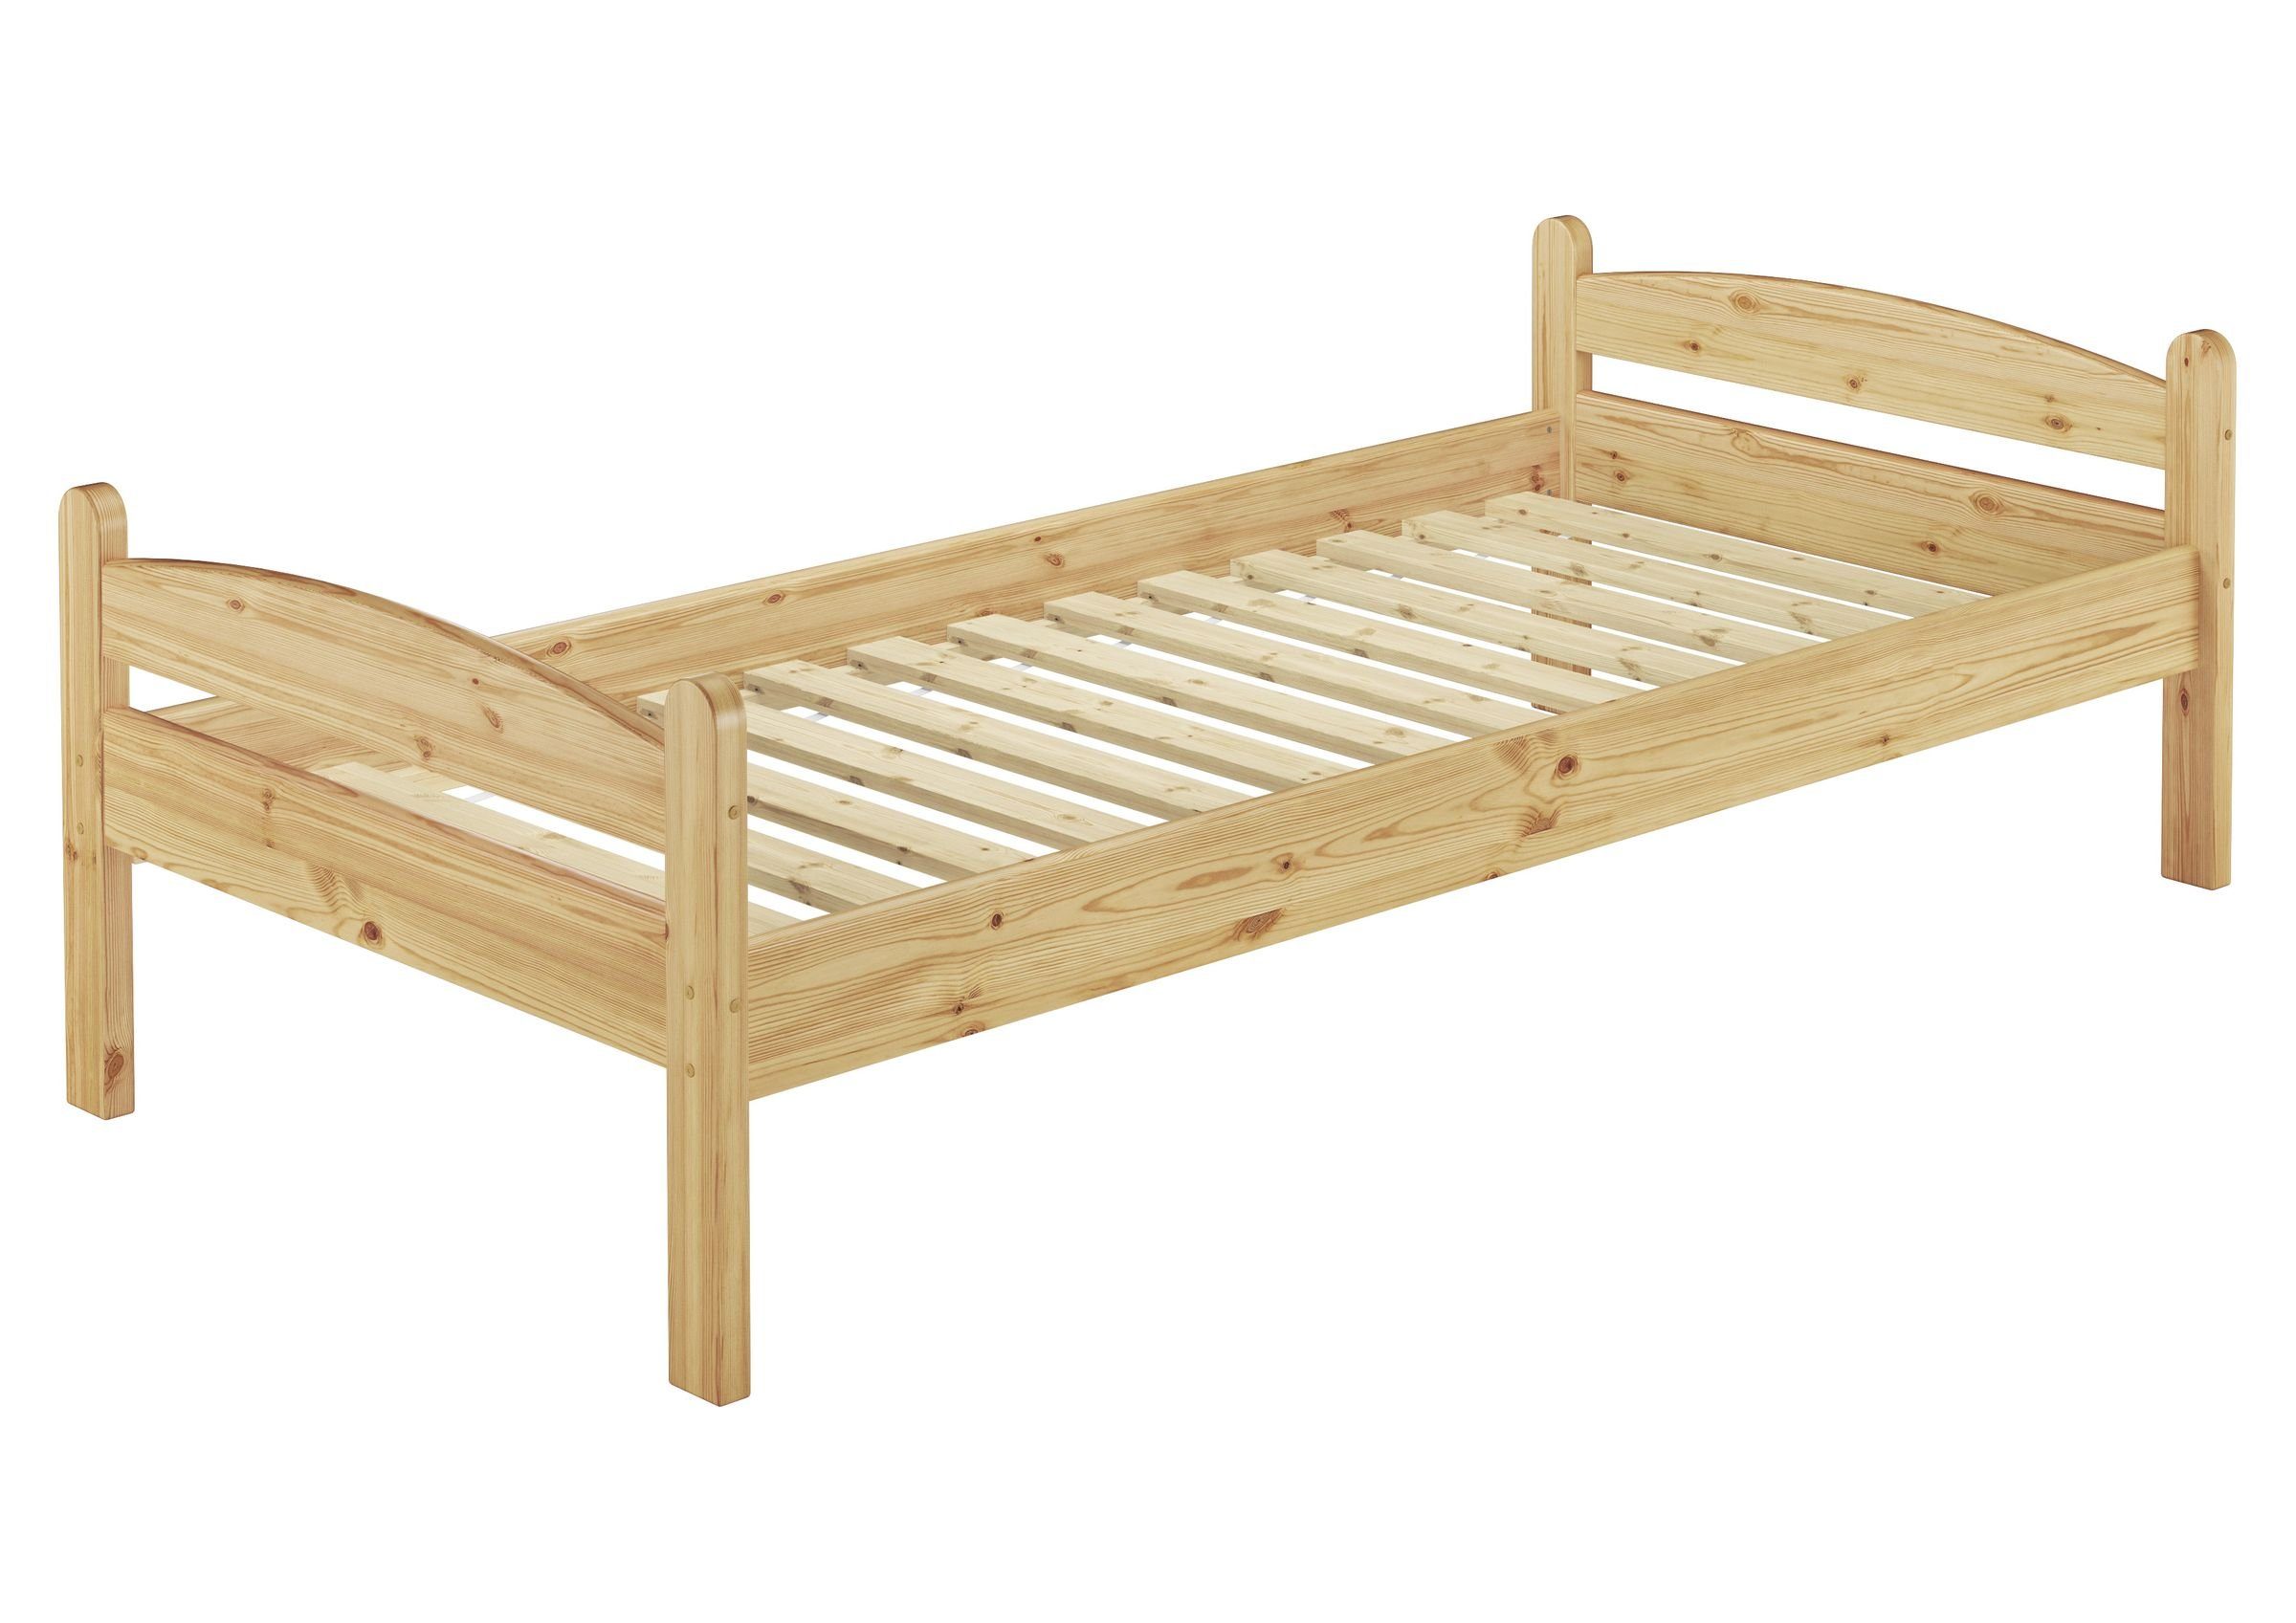 ERST-HOLZ Bett Holzgestell, 100x200, Kieferfarblos lackiert mit und Rost Matratze Bettenset